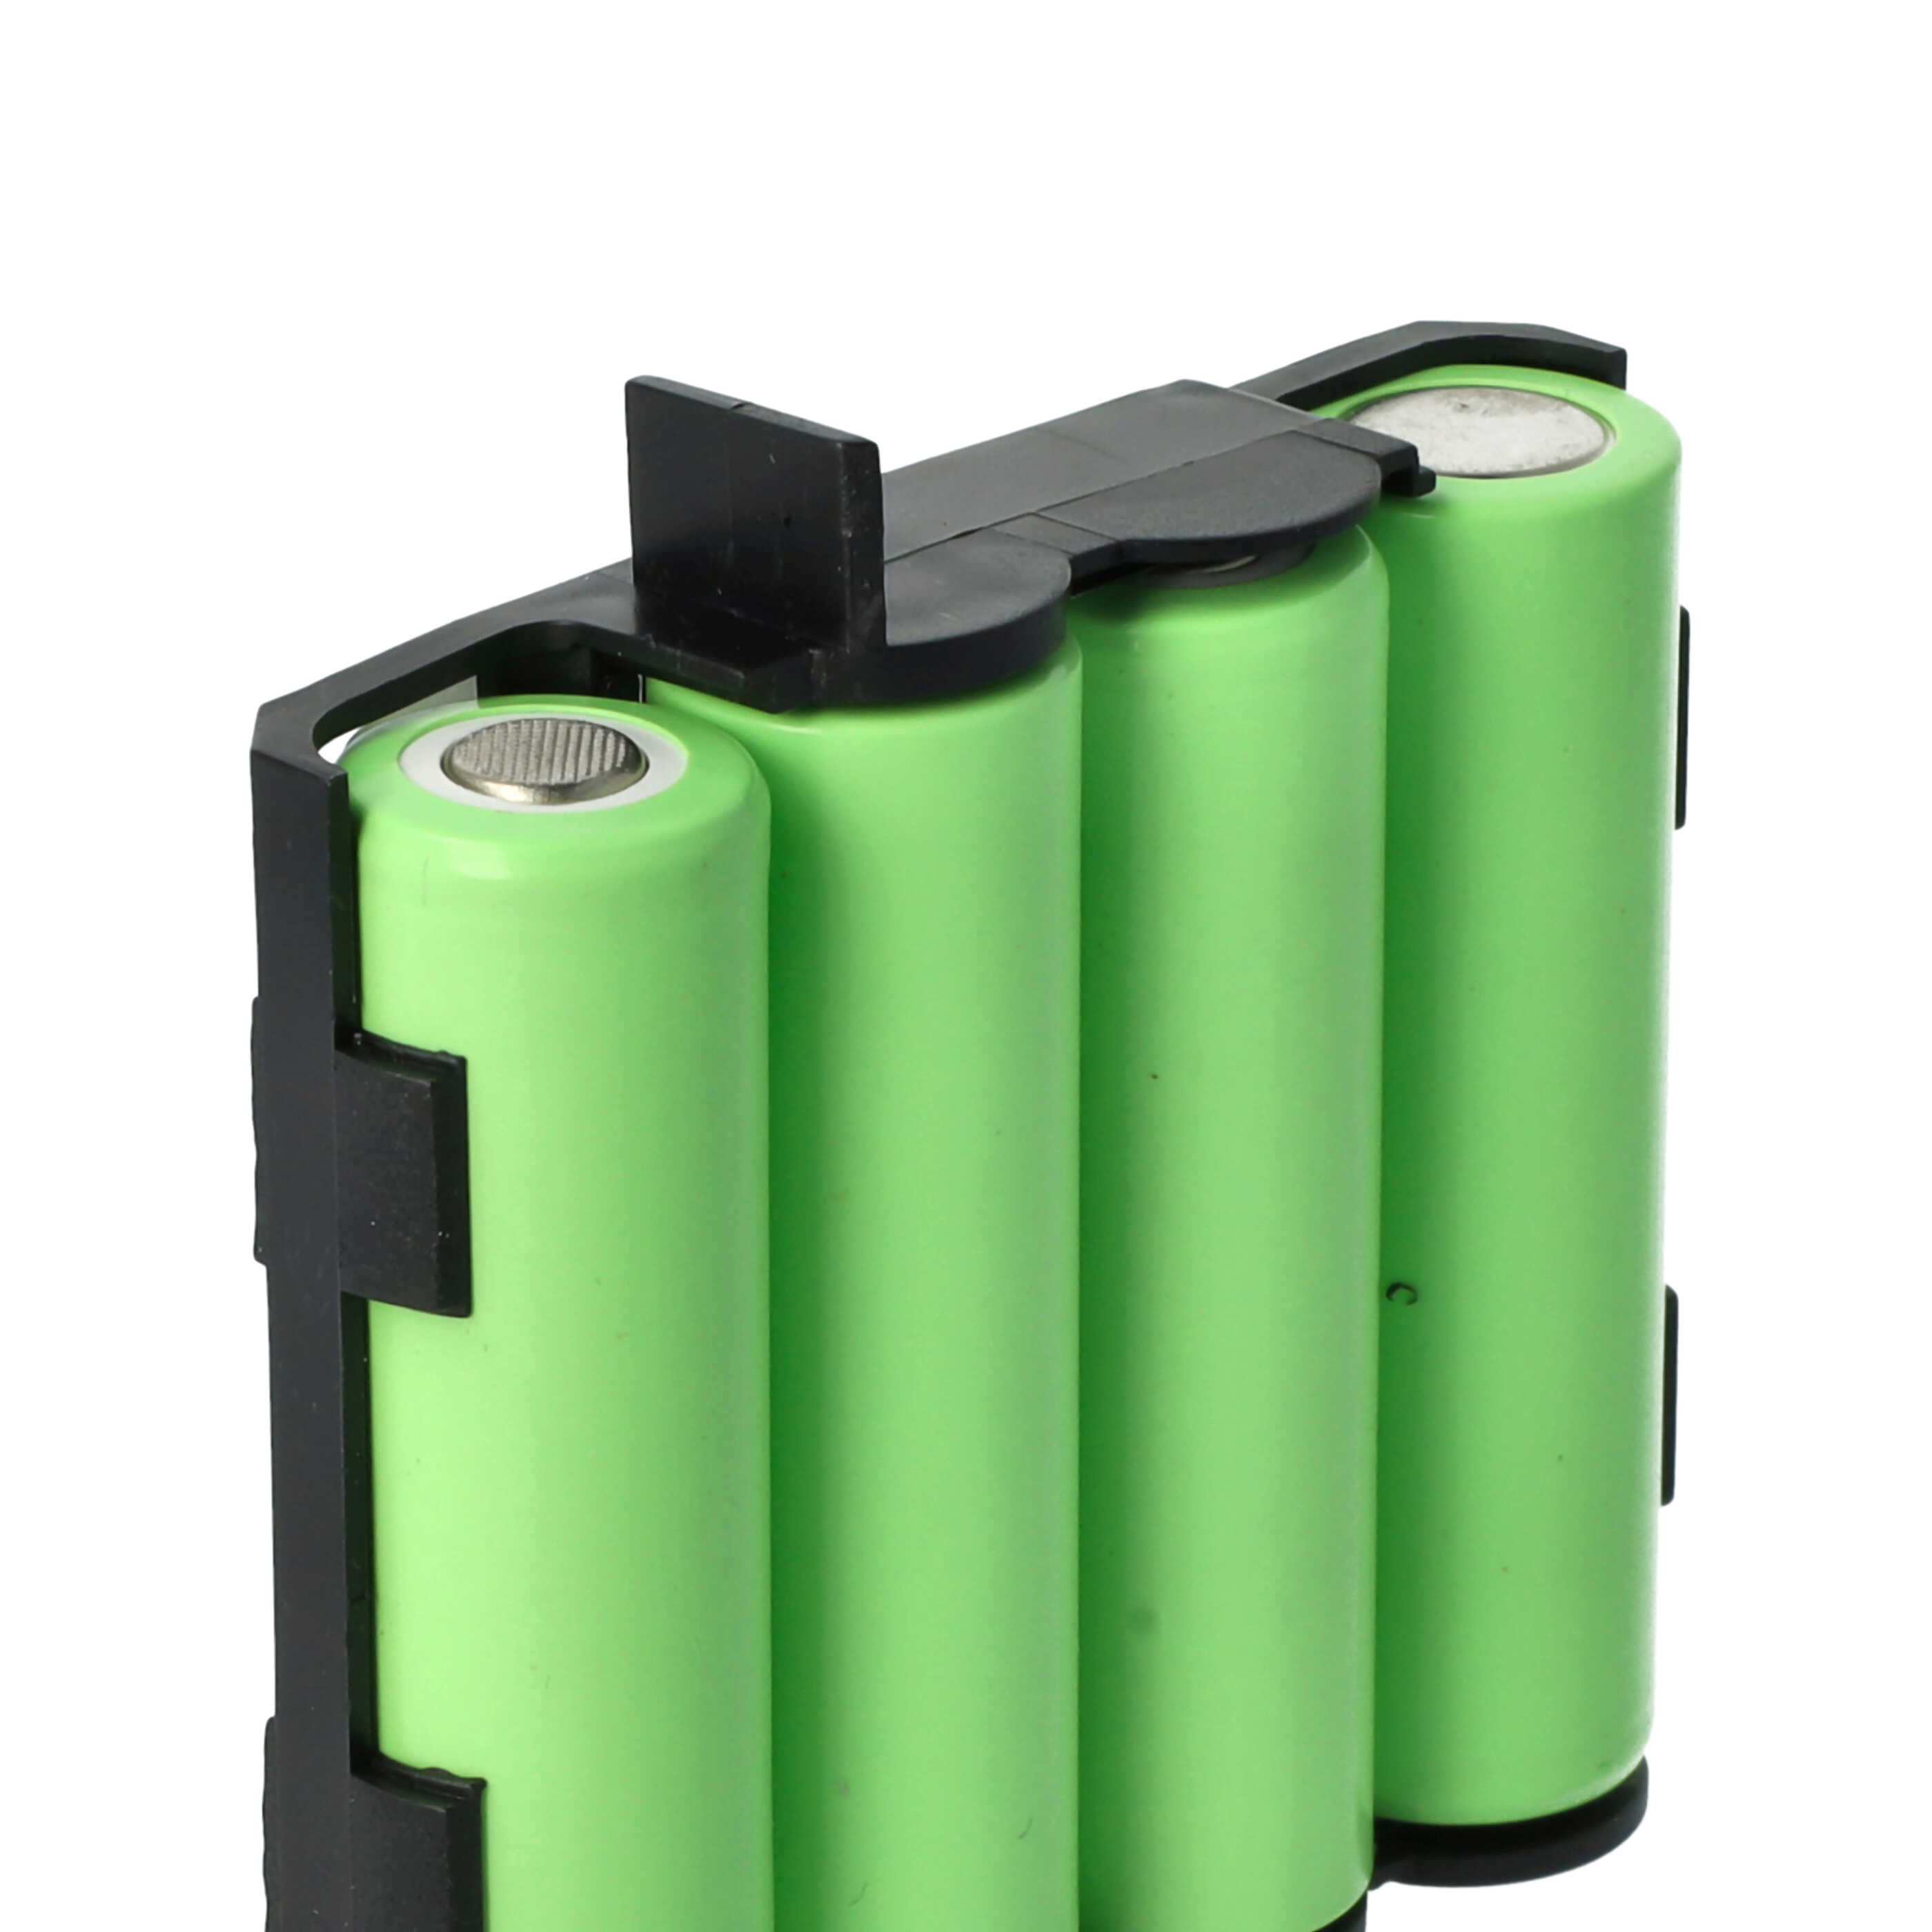 Batería reemplaza Compex 4H-AA2000 para tecnología médica - 1500 mAh, 4,8 V